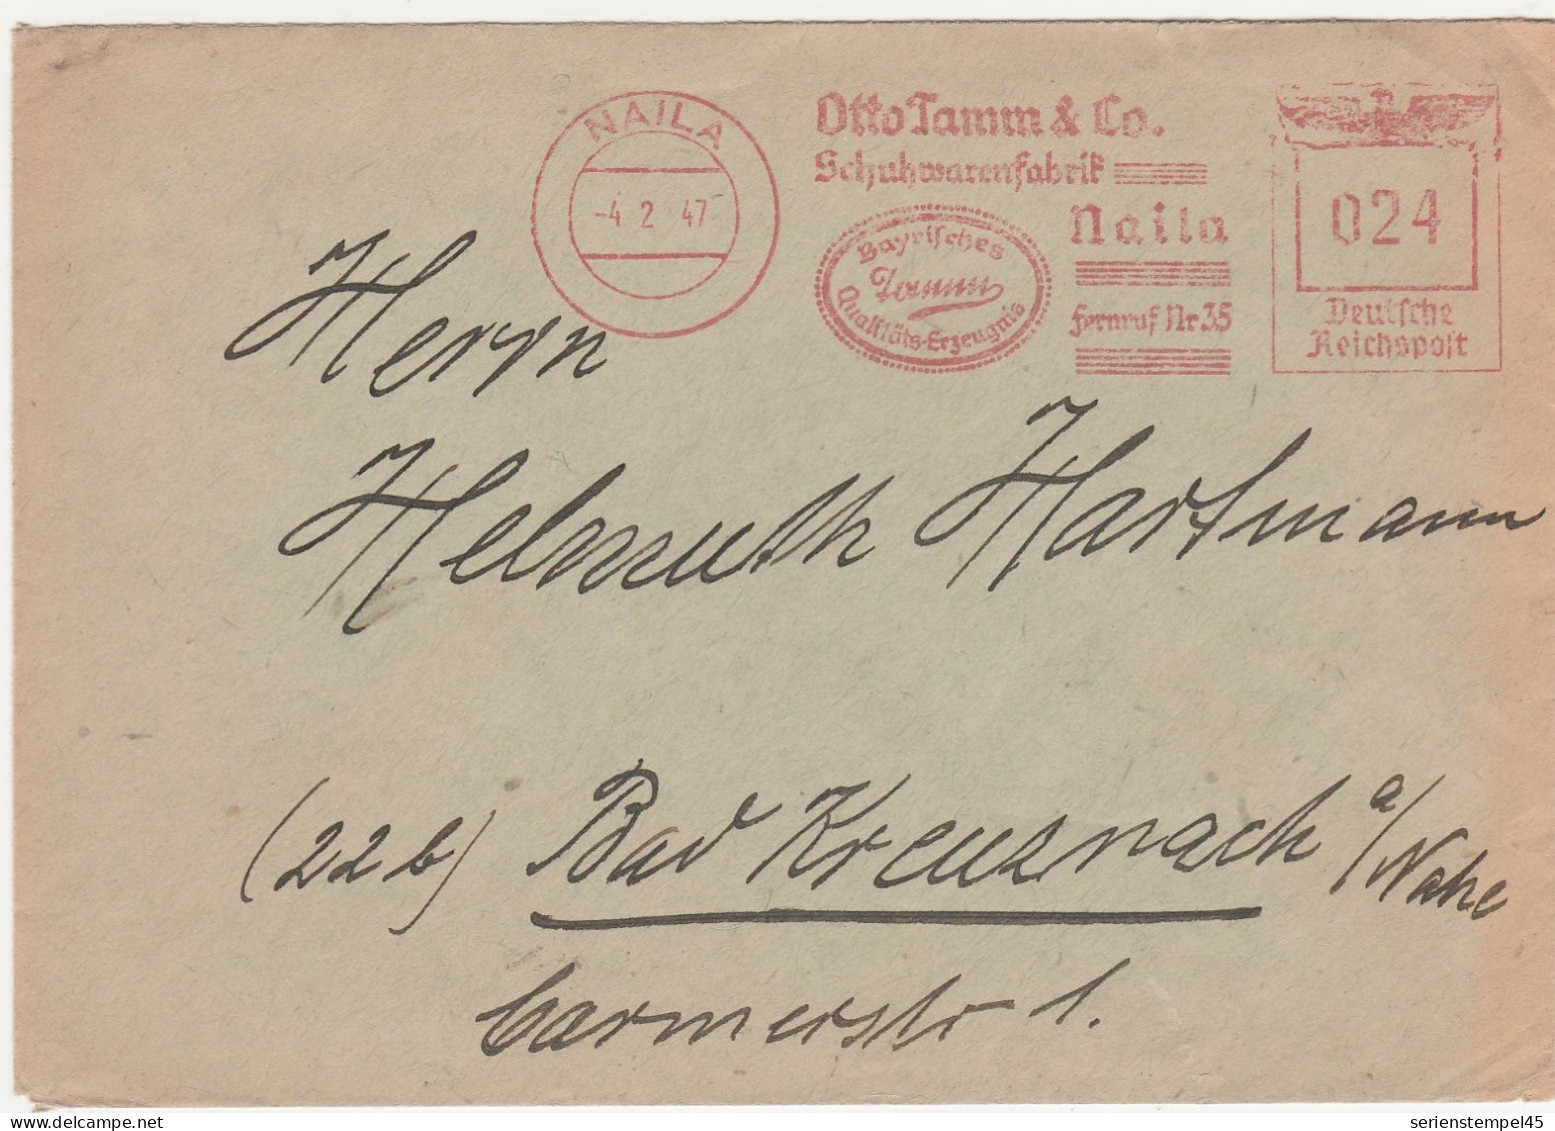 Deutschland 1947 Brief Mit Freistempel Naila Otto Tamm & Co Schuhwarenfabrik LK Hof Alter Stempelkopf - Emisiones De Necesidad Zona Americana